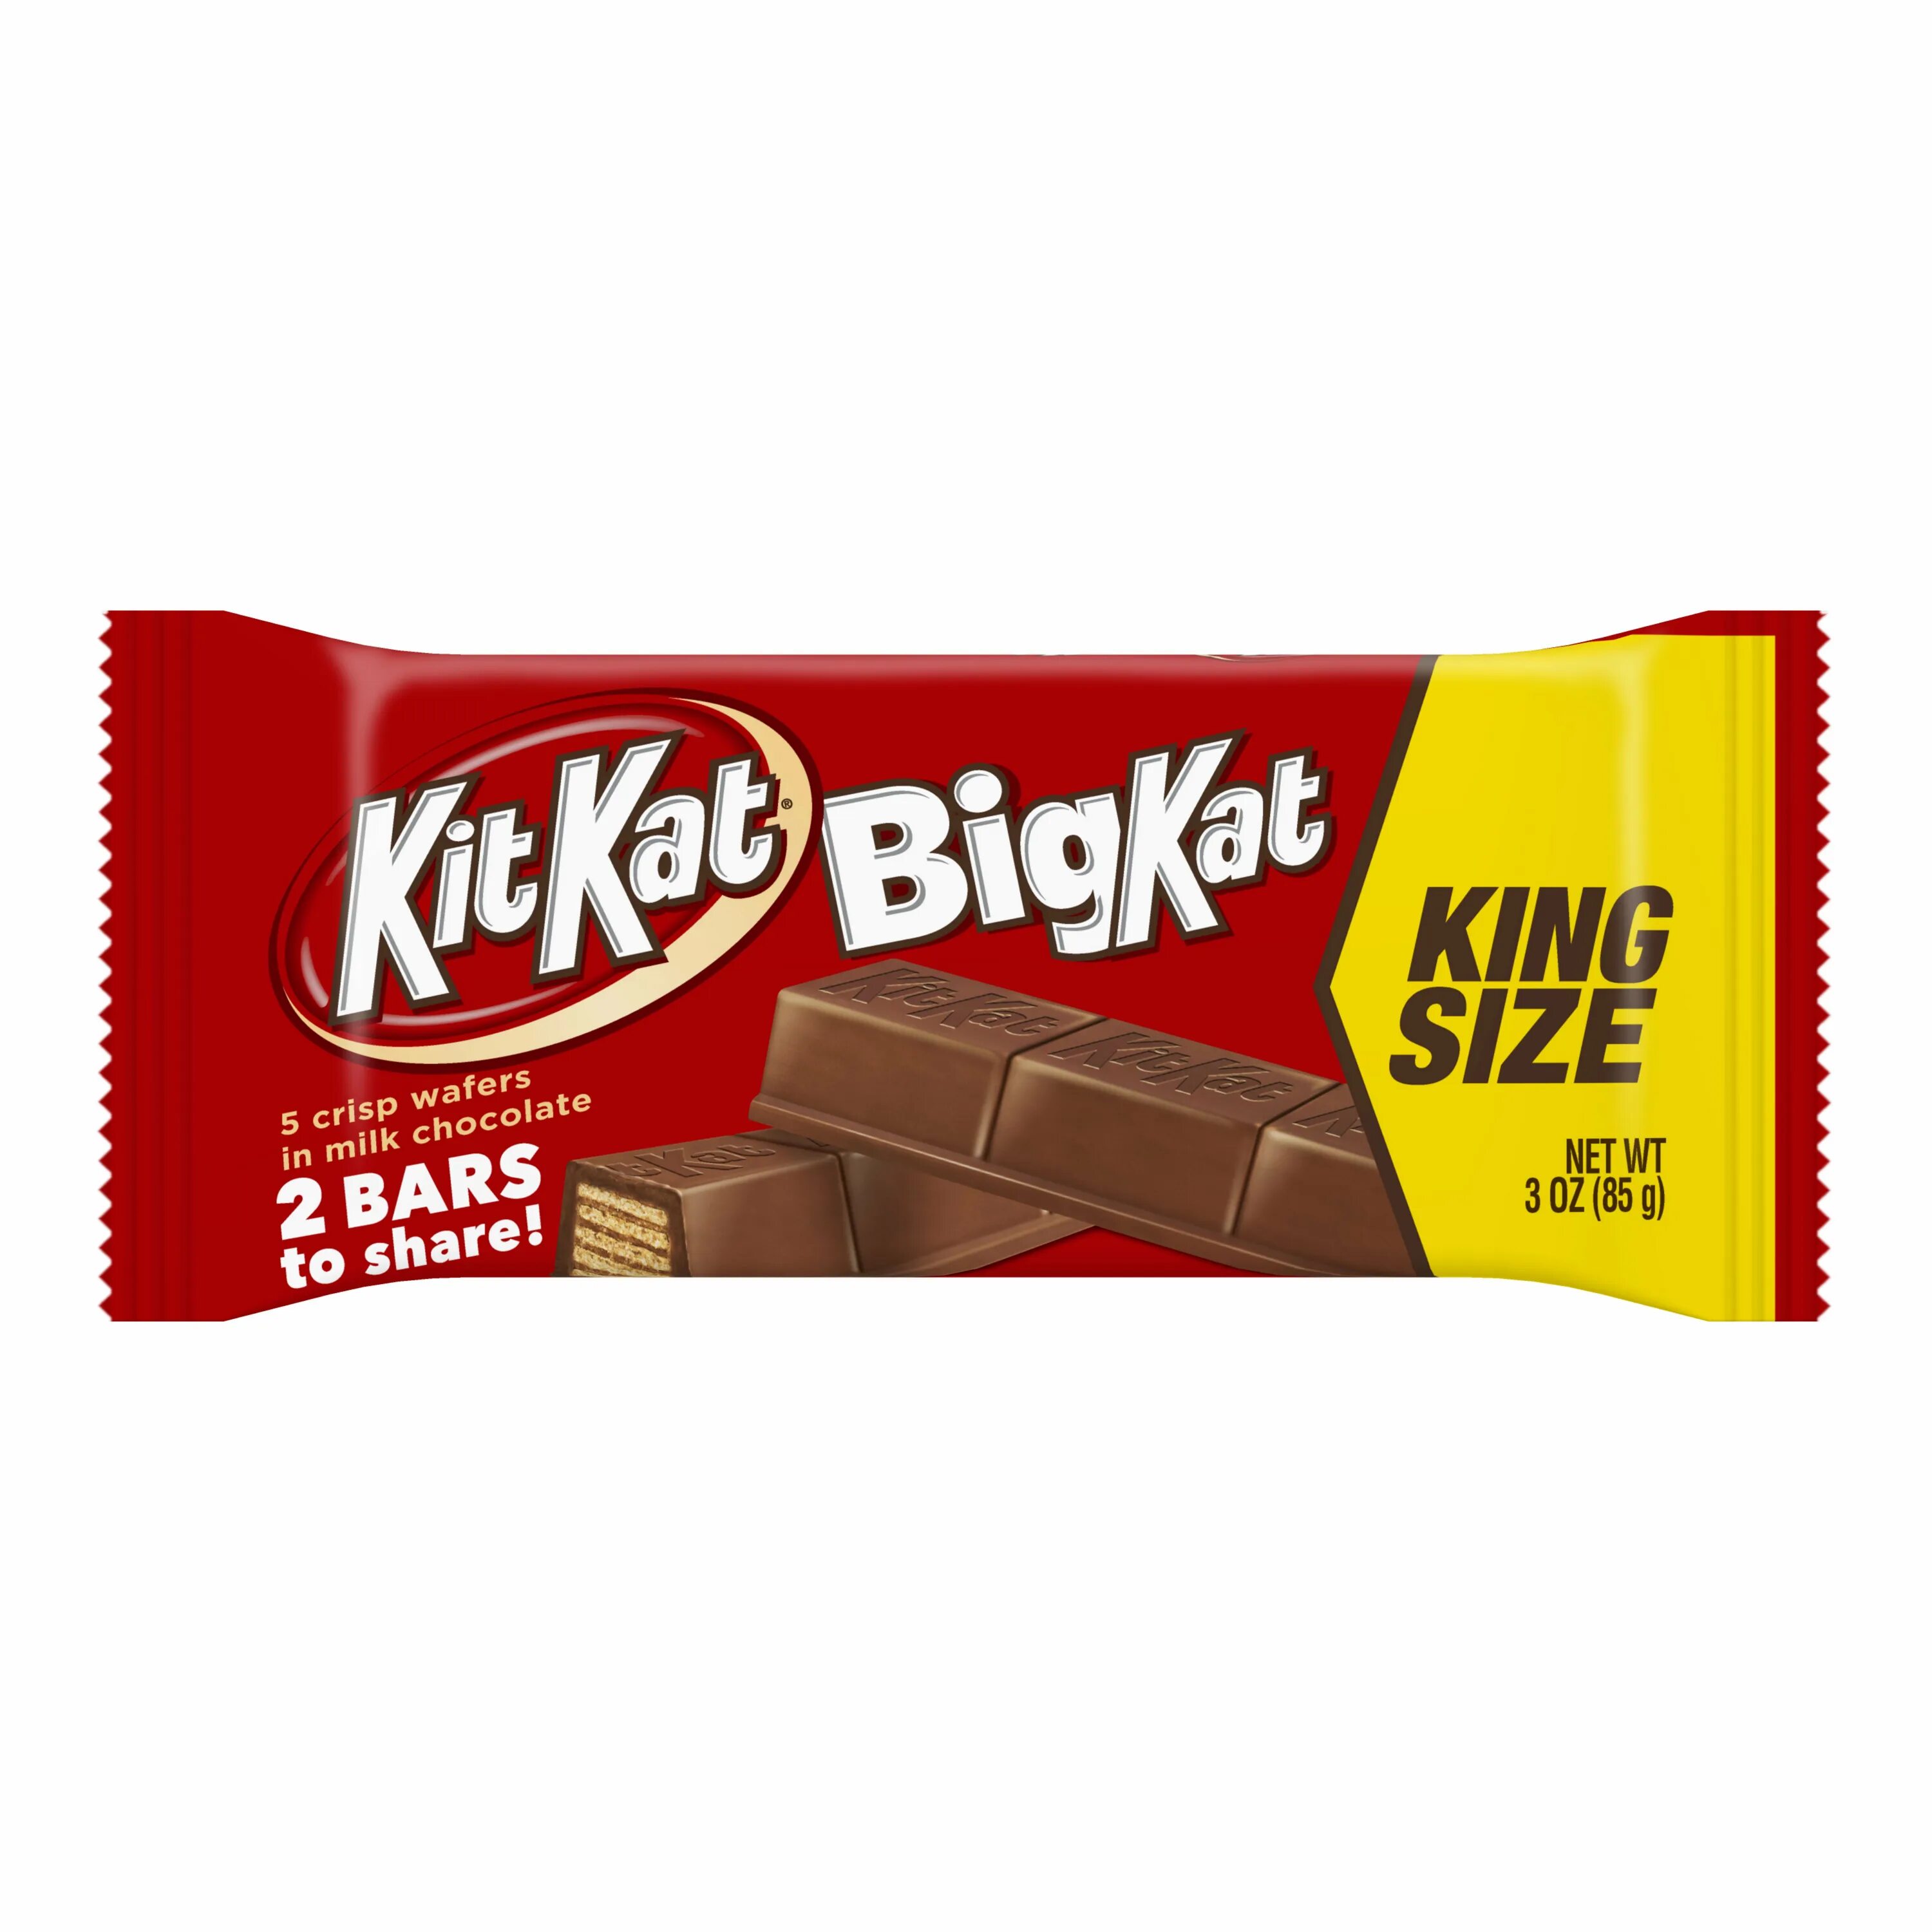 Шоколадка king. Кит кат Кинг сайз. Kitkat большой. King Size шоколадка. Kit kat King Size.